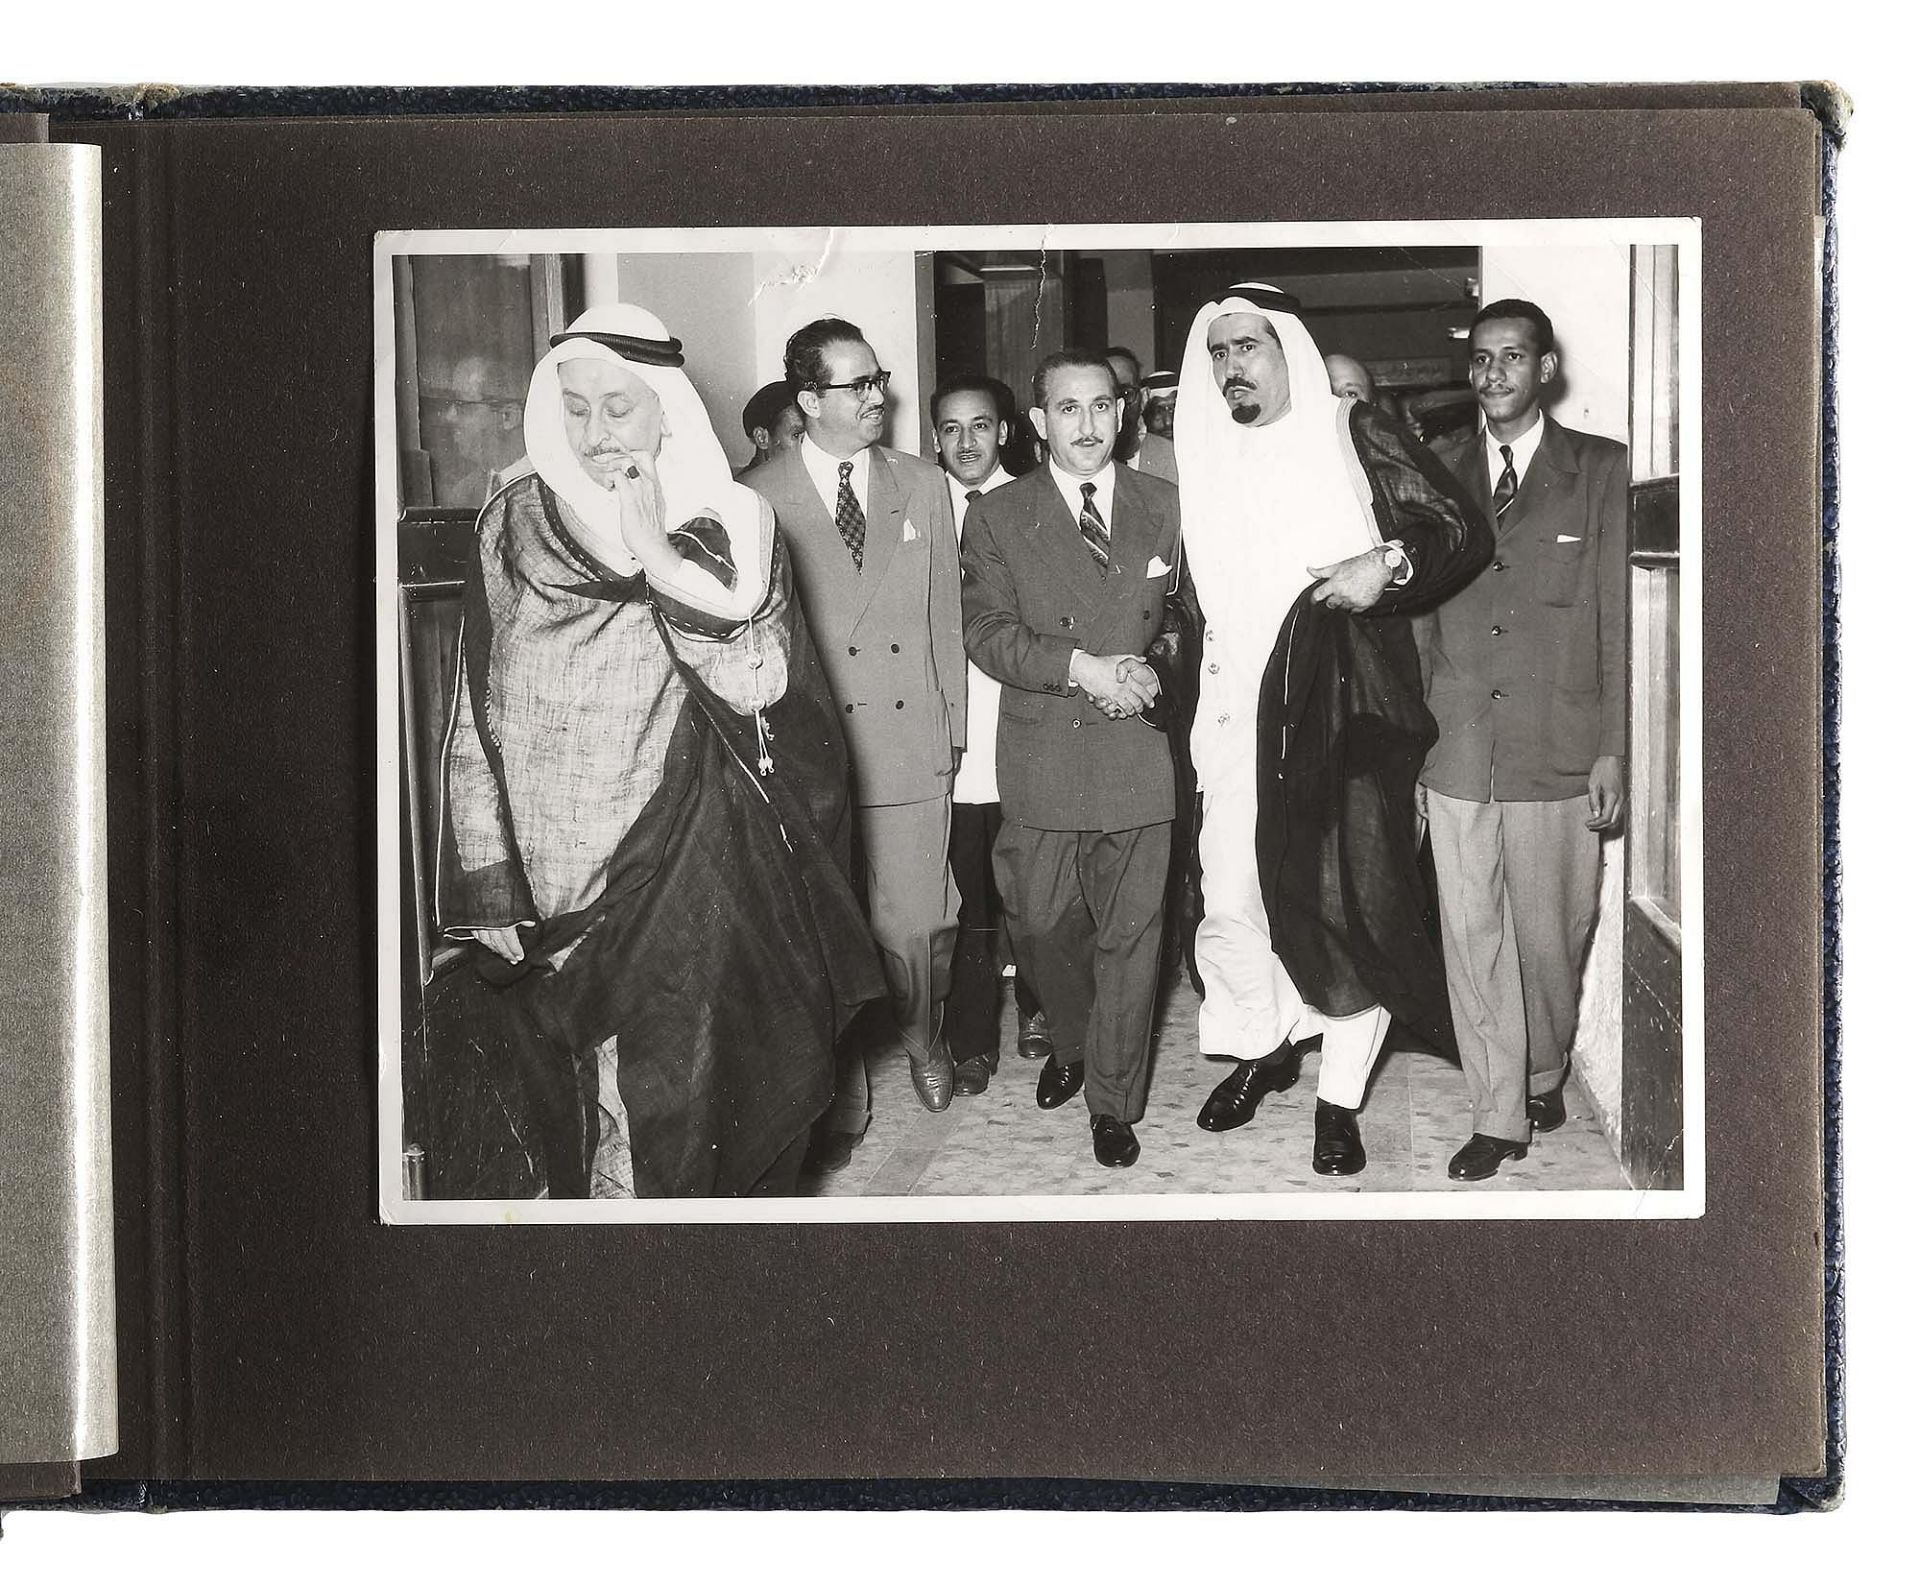 A RARE PHOTO ALBUM INCLUDING 11 ORIGINAL PHOTOS OF HIS HIGHNESS PRINCE MUHAMMAD BIN ABDUL AZIZ DURIN - Image 2 of 4